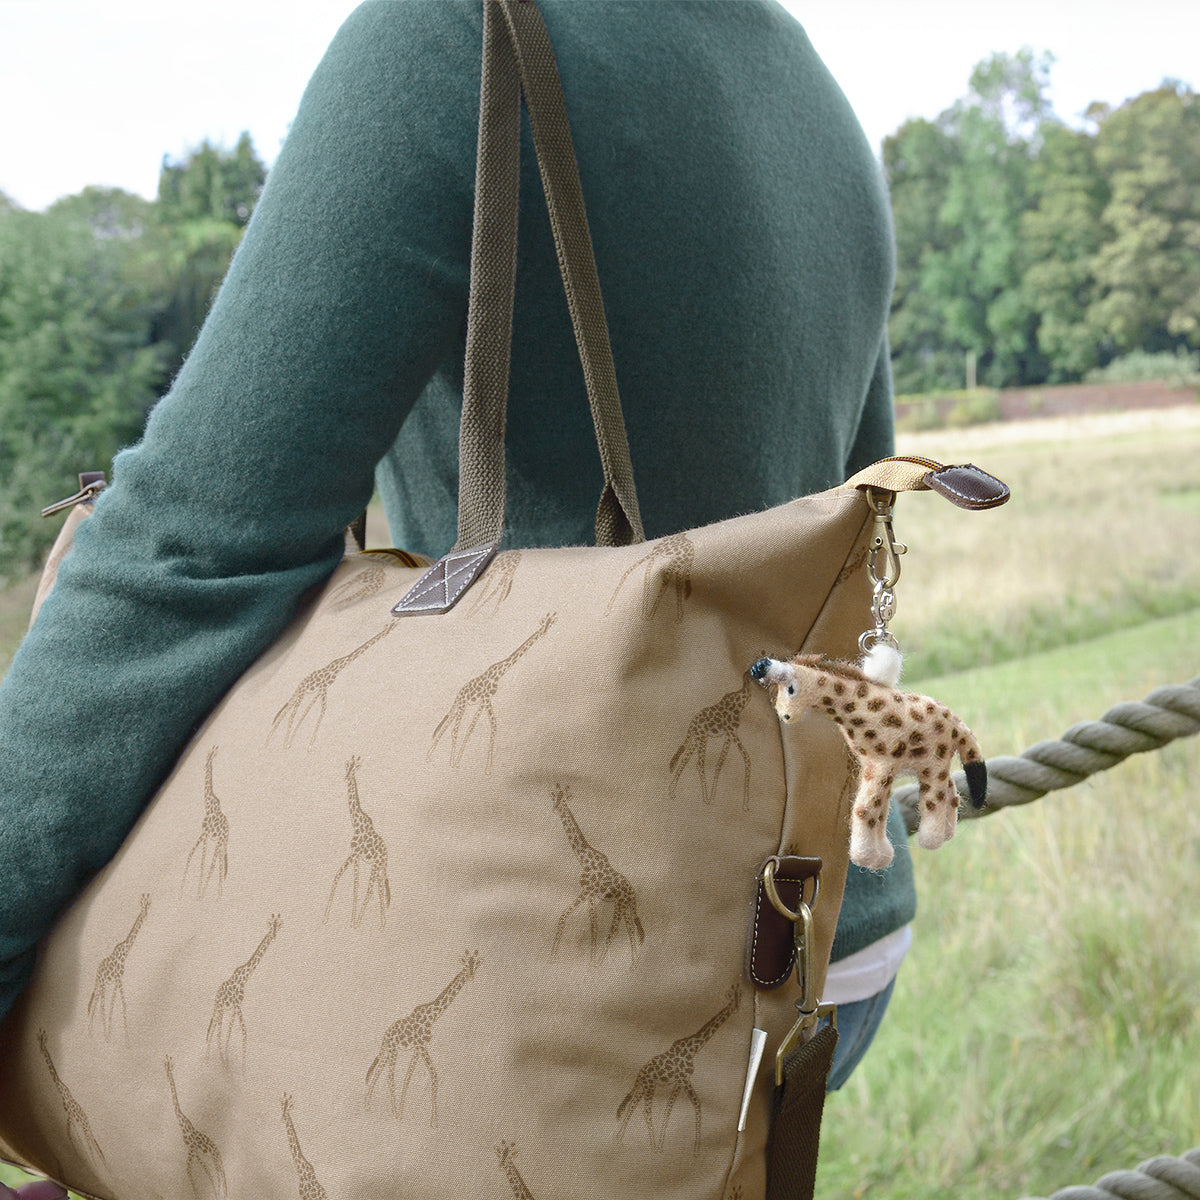 Weekend Bag with Giraffe print by Sophie Allport